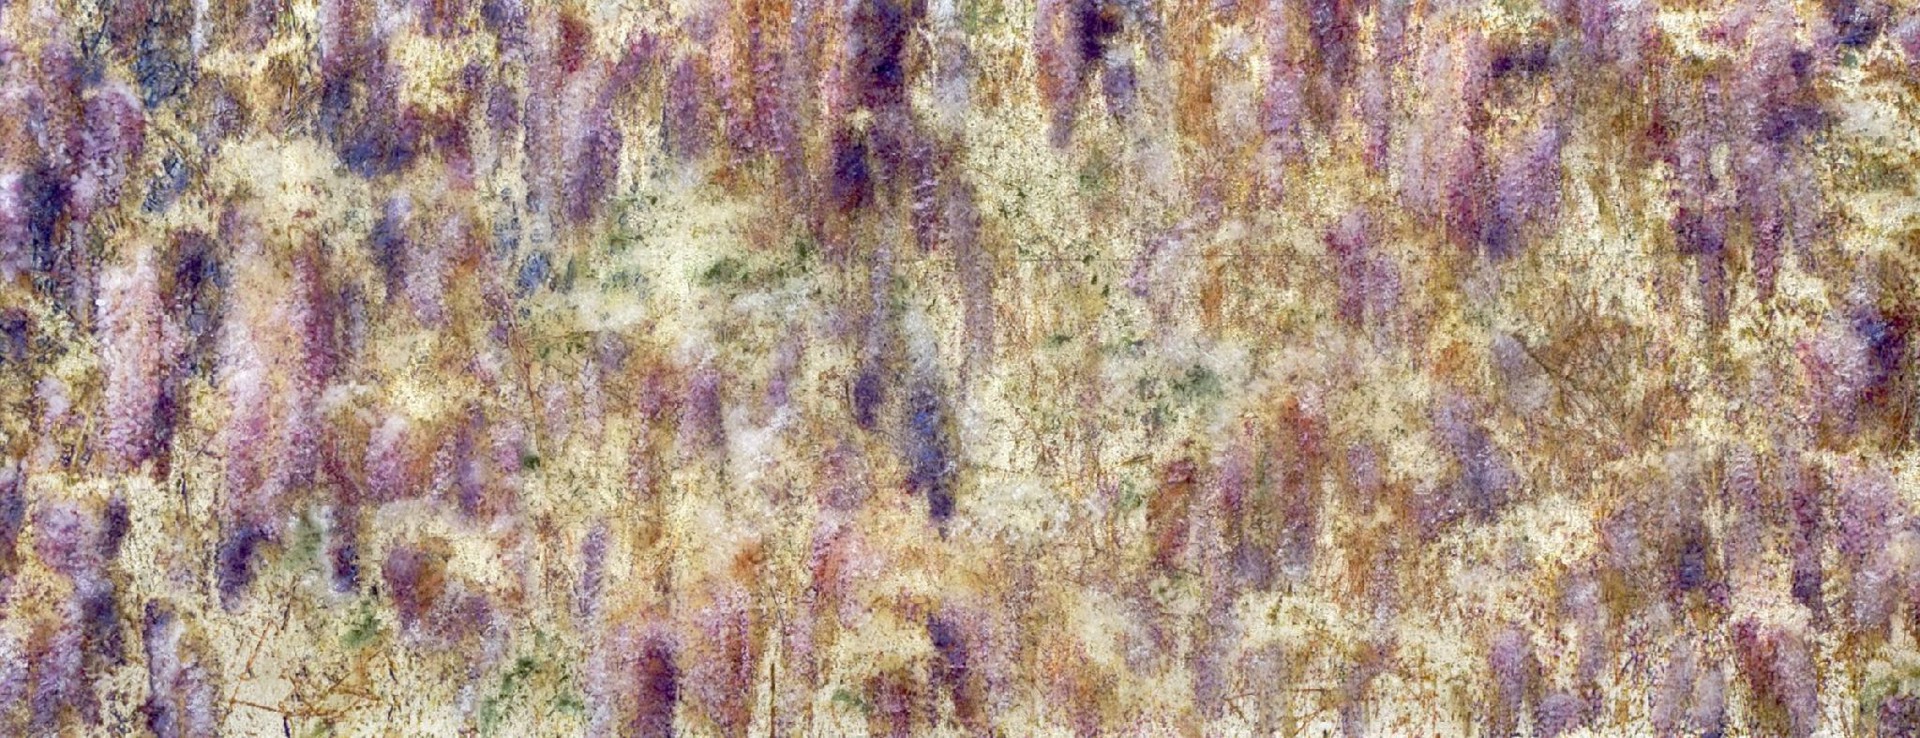 Lavender Lace by Susan Goldsmith